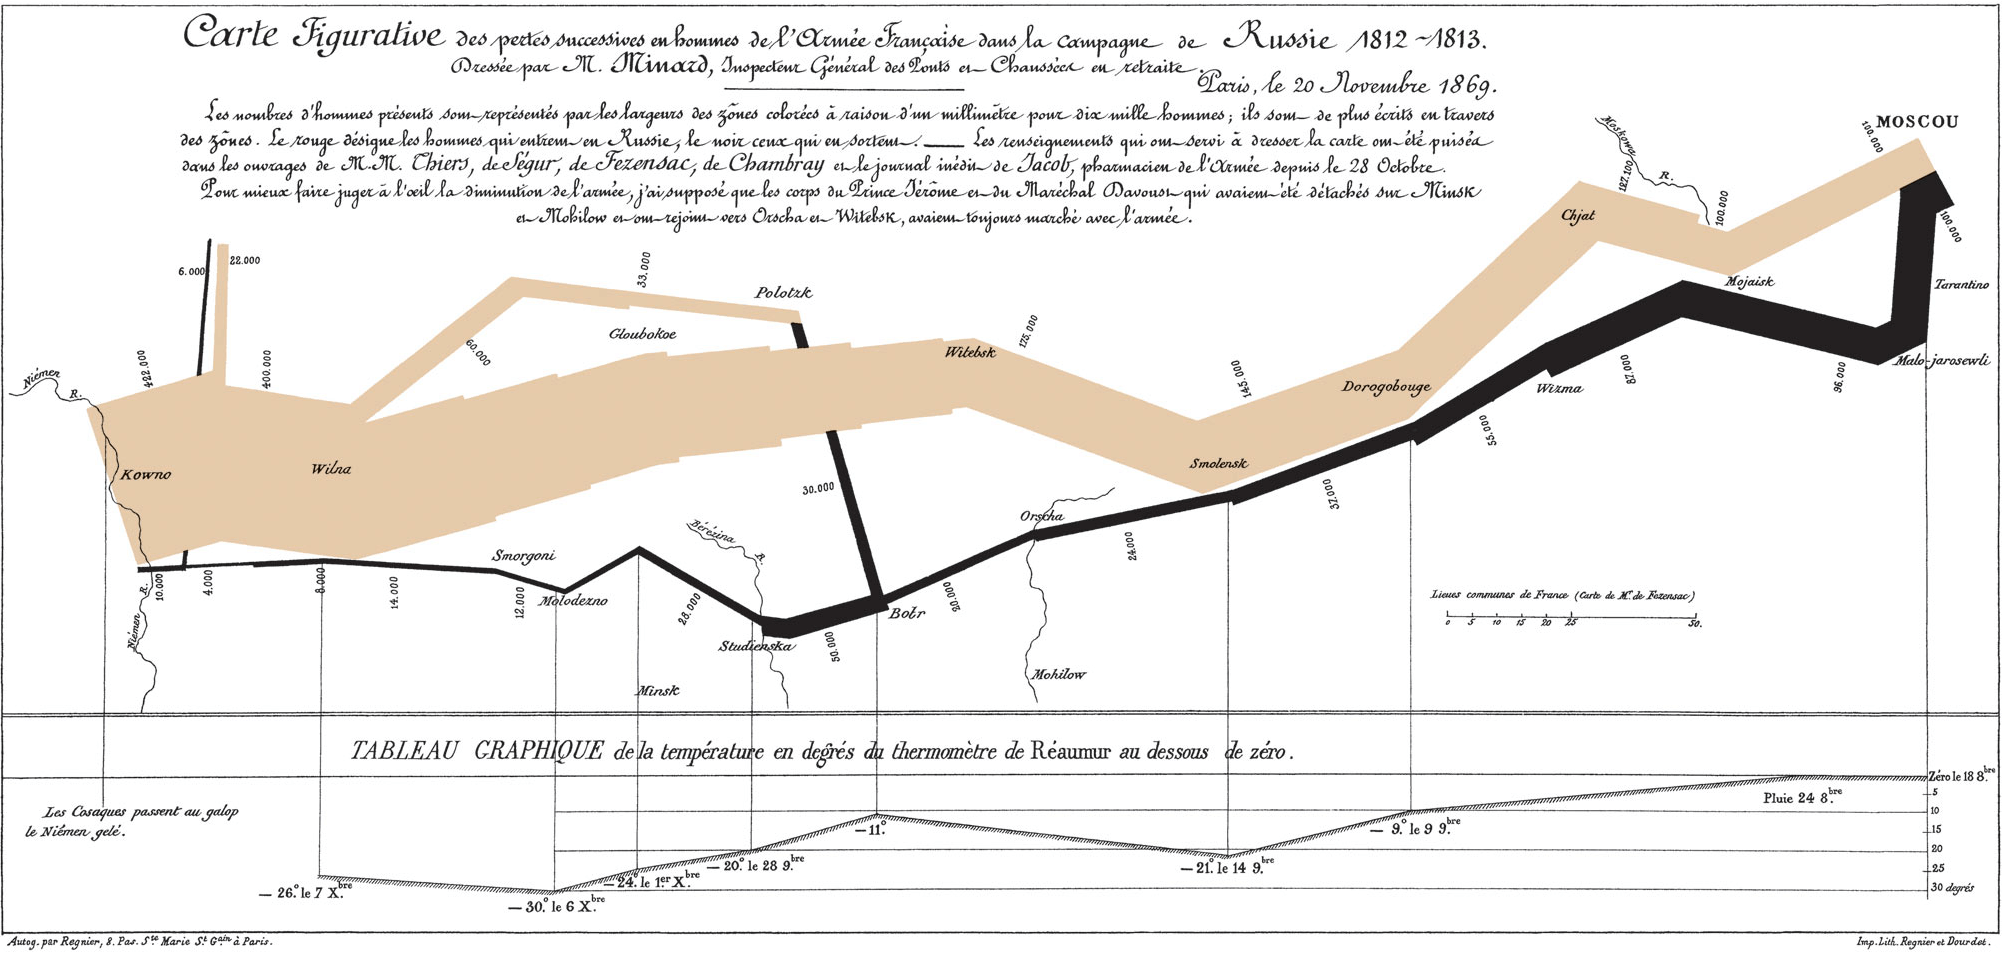 Historic data visualization